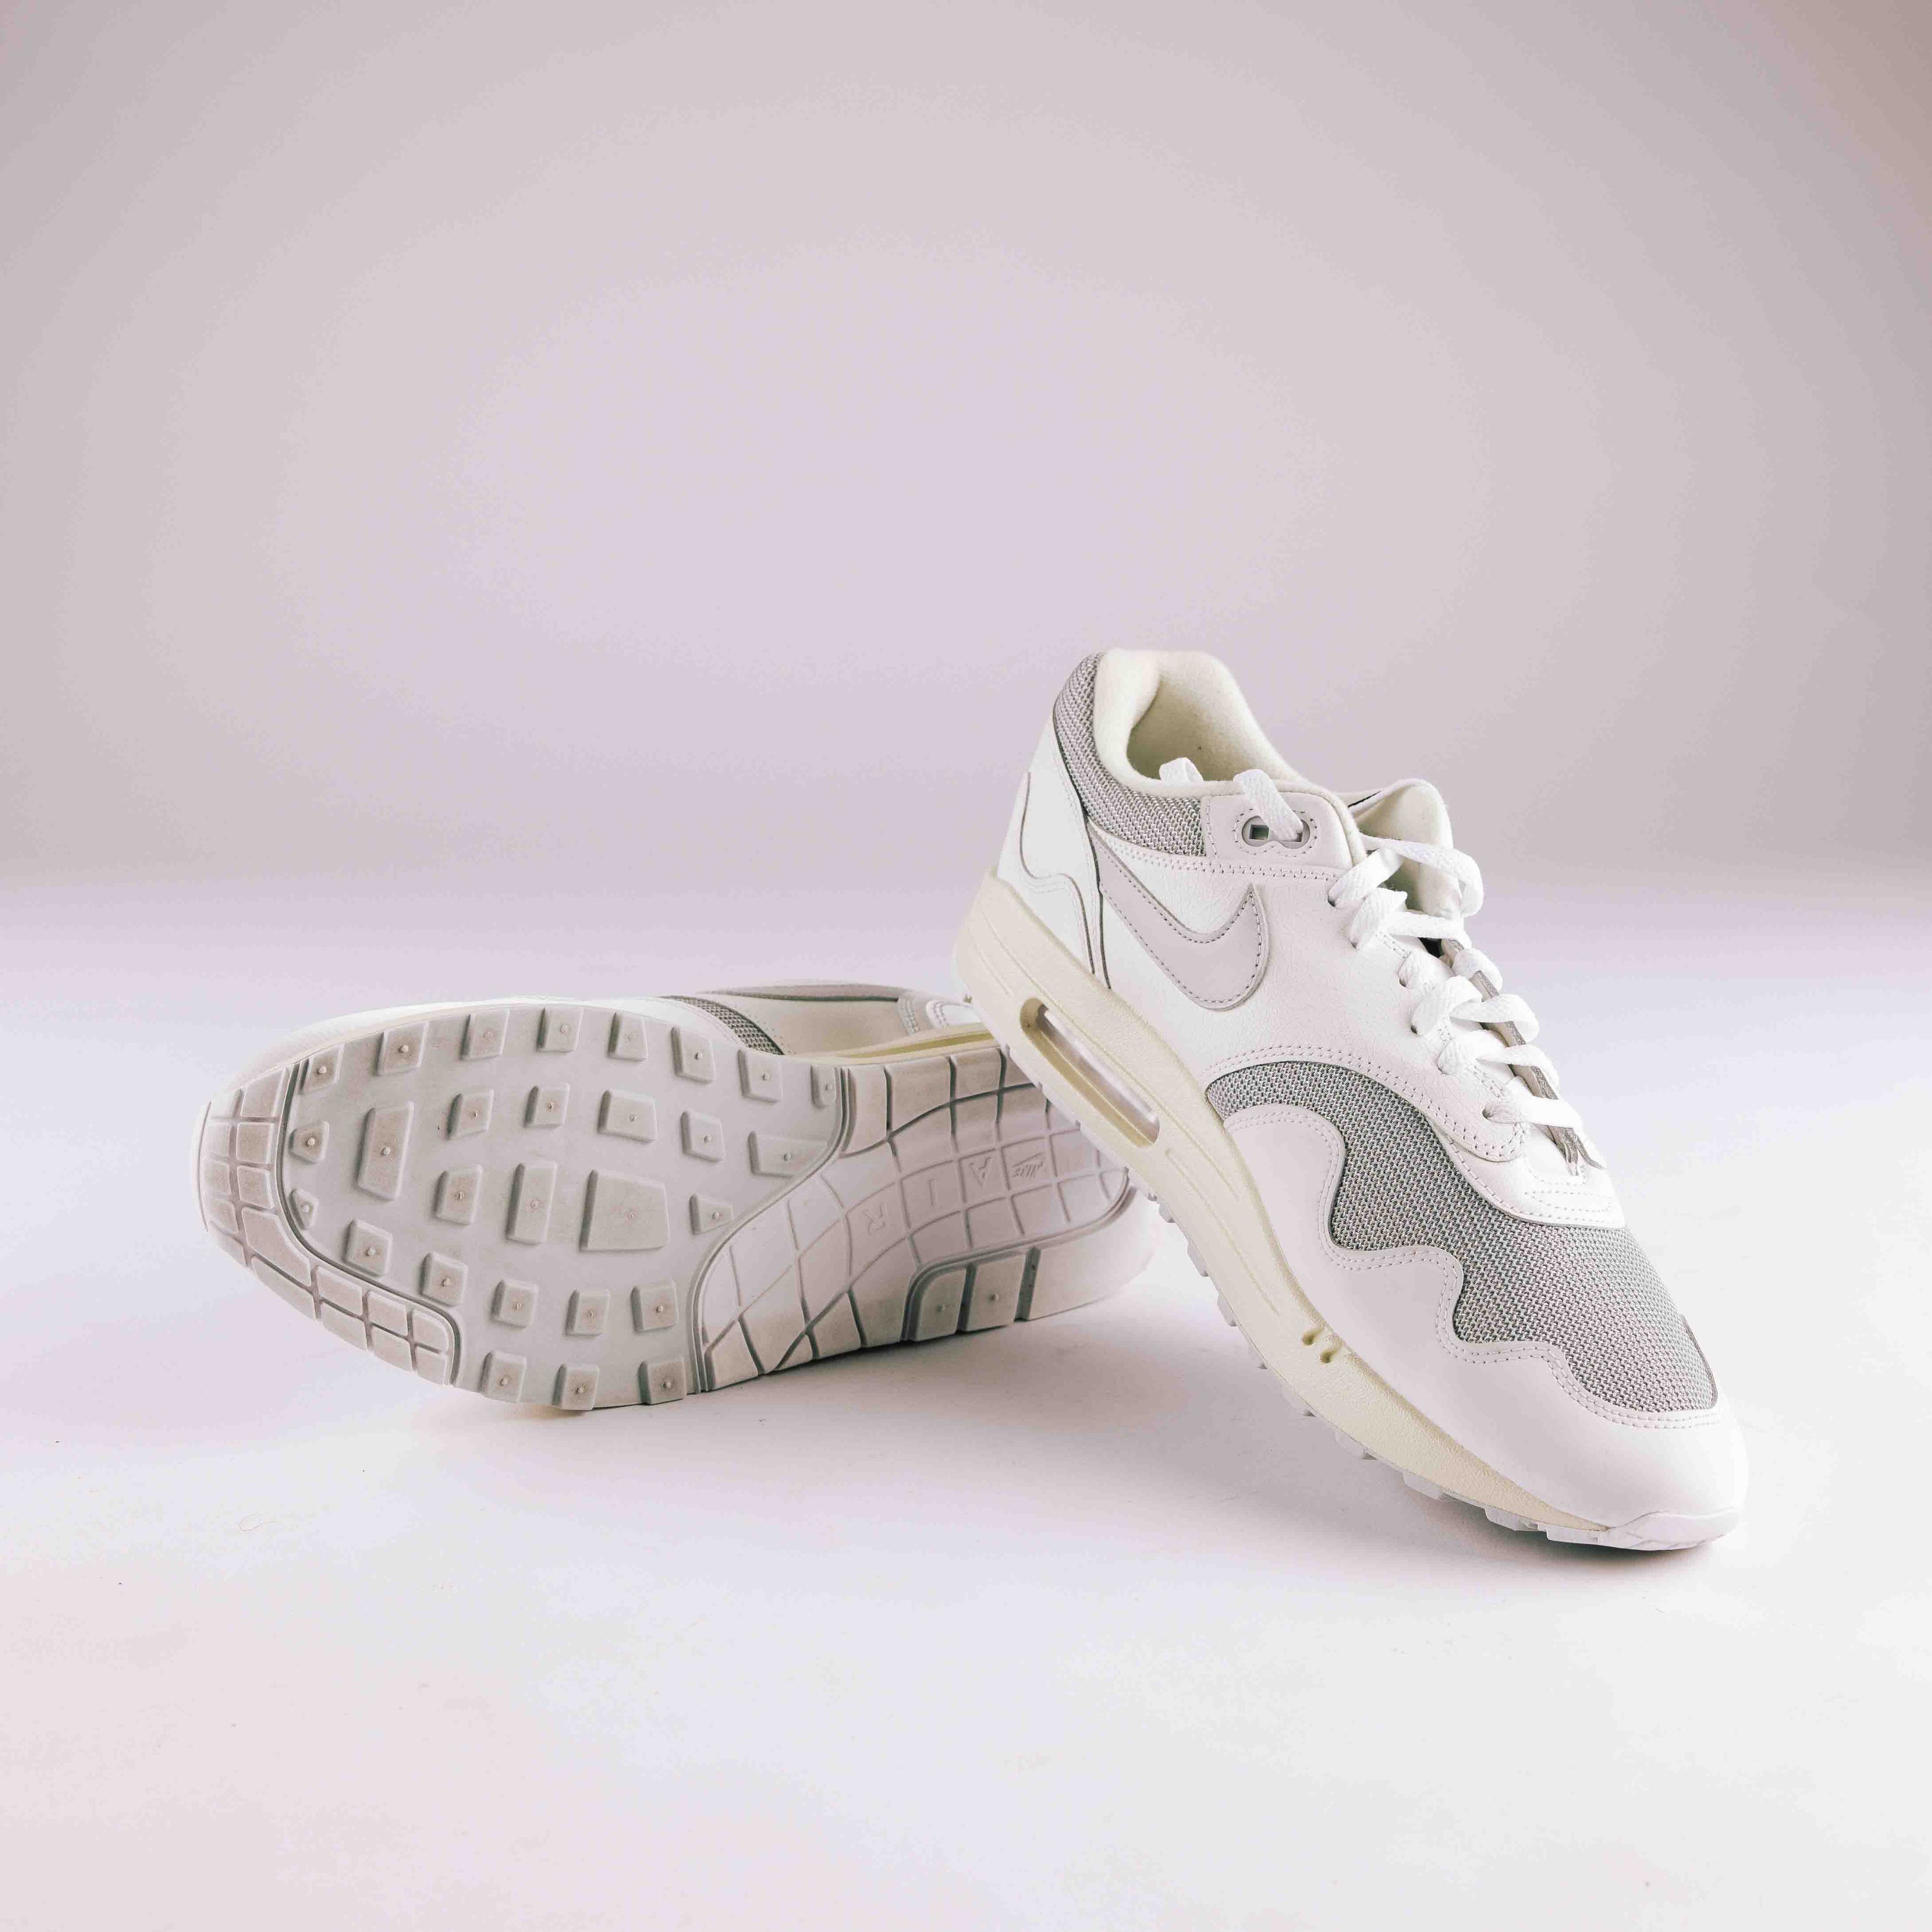 Nike Air Max 1 Patta Waves White (Used)